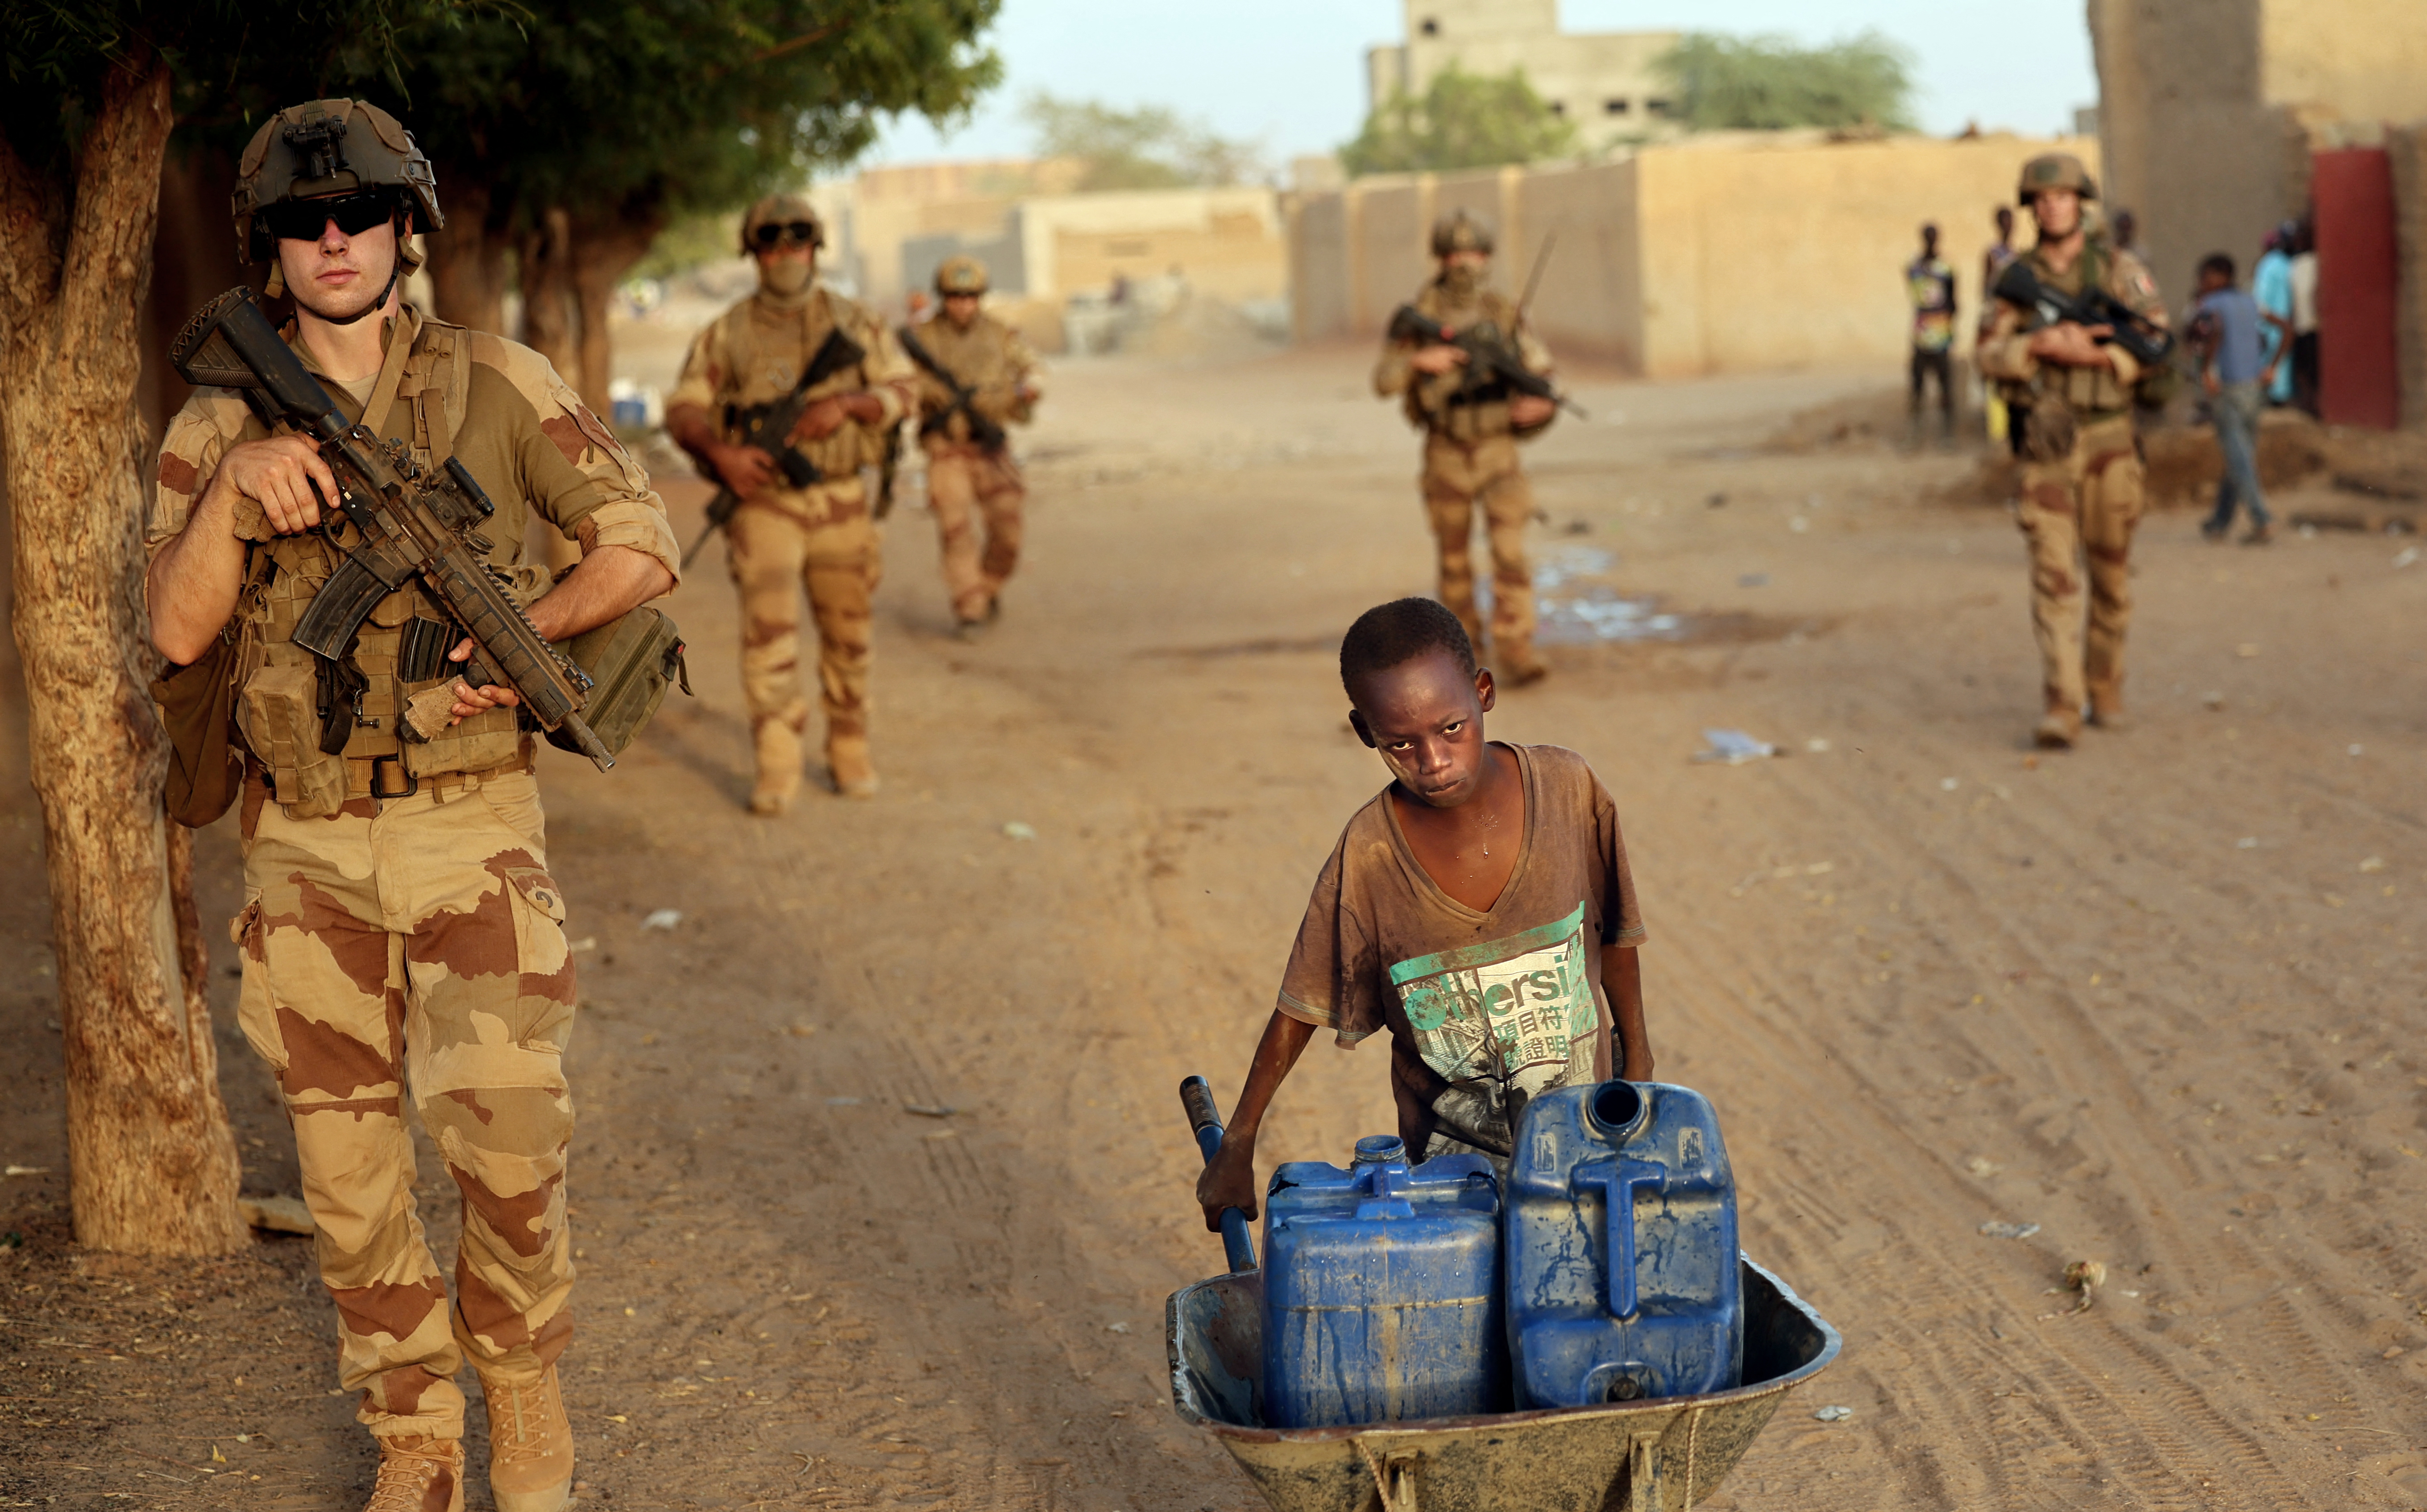 Kilenc év után távoznak a francia csapatok Maliból